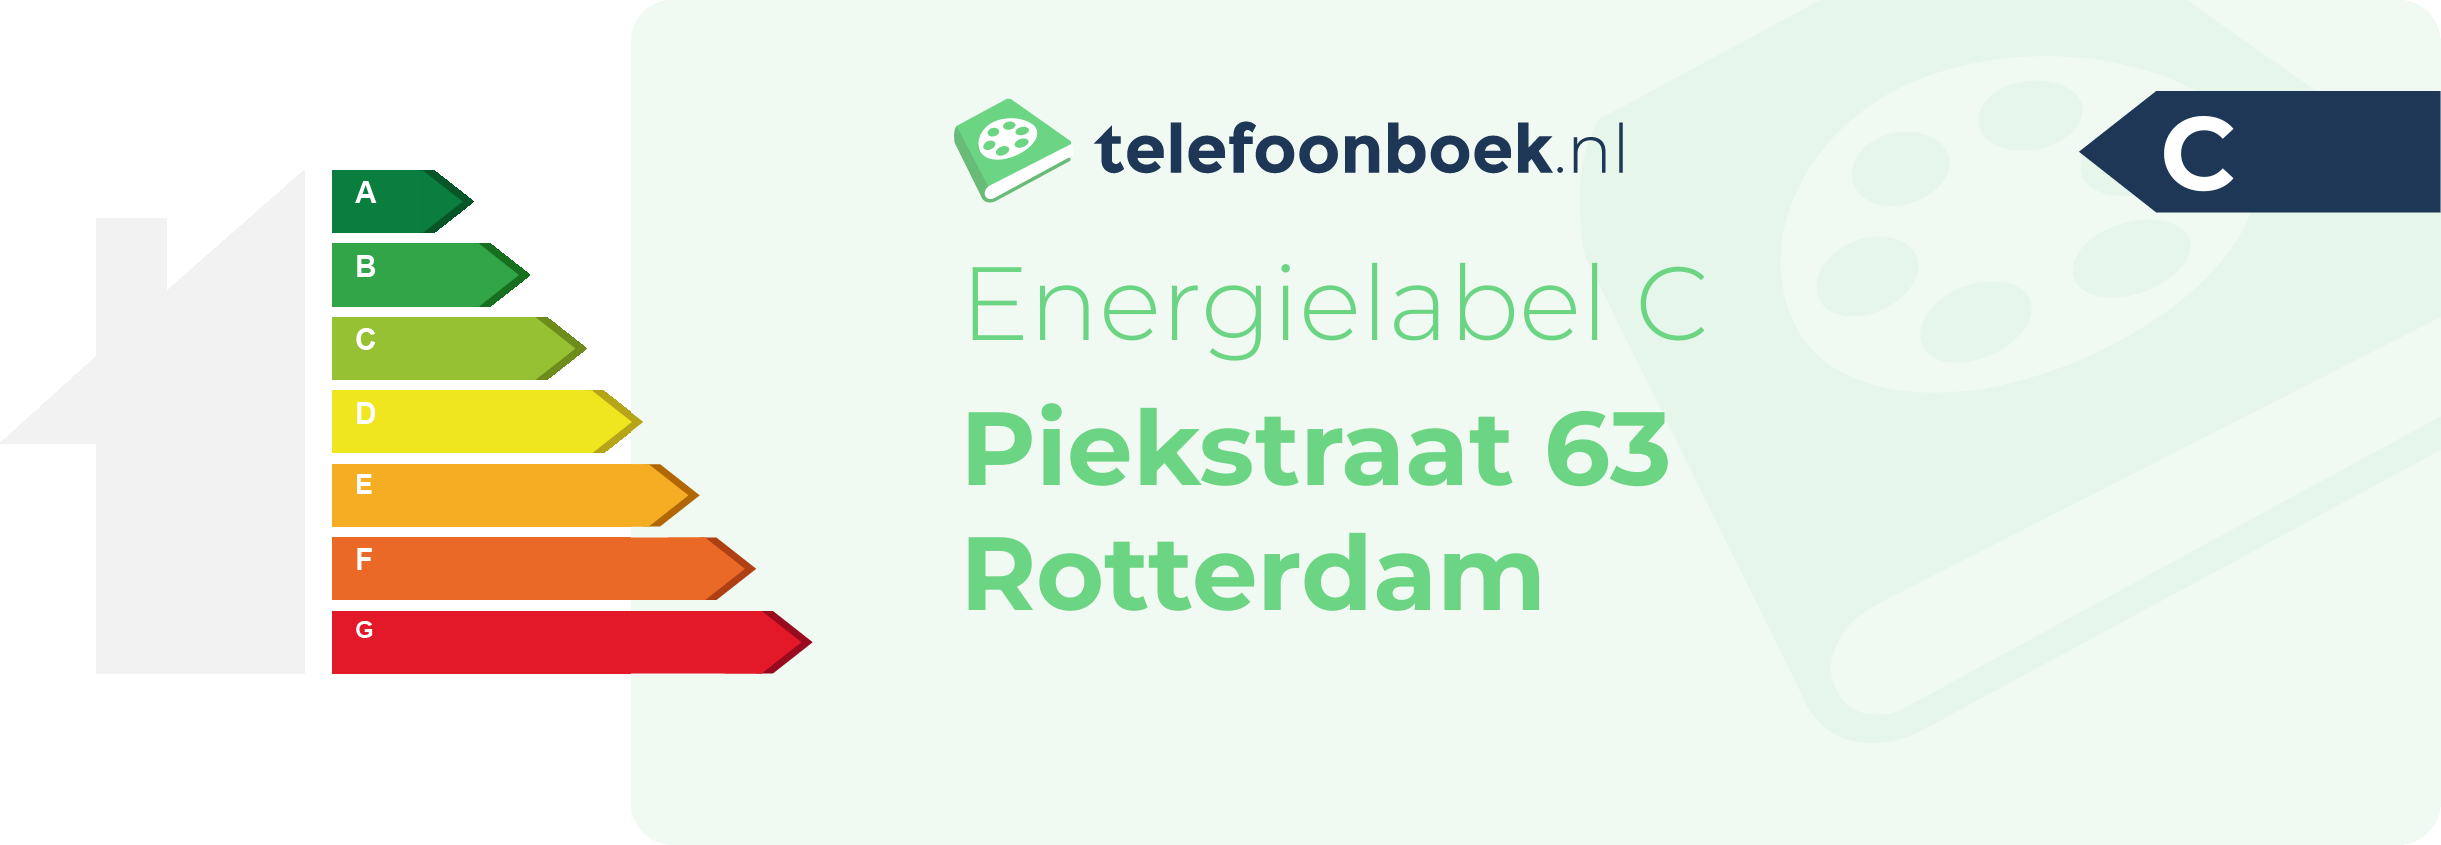 Energielabel Piekstraat 63 Rotterdam